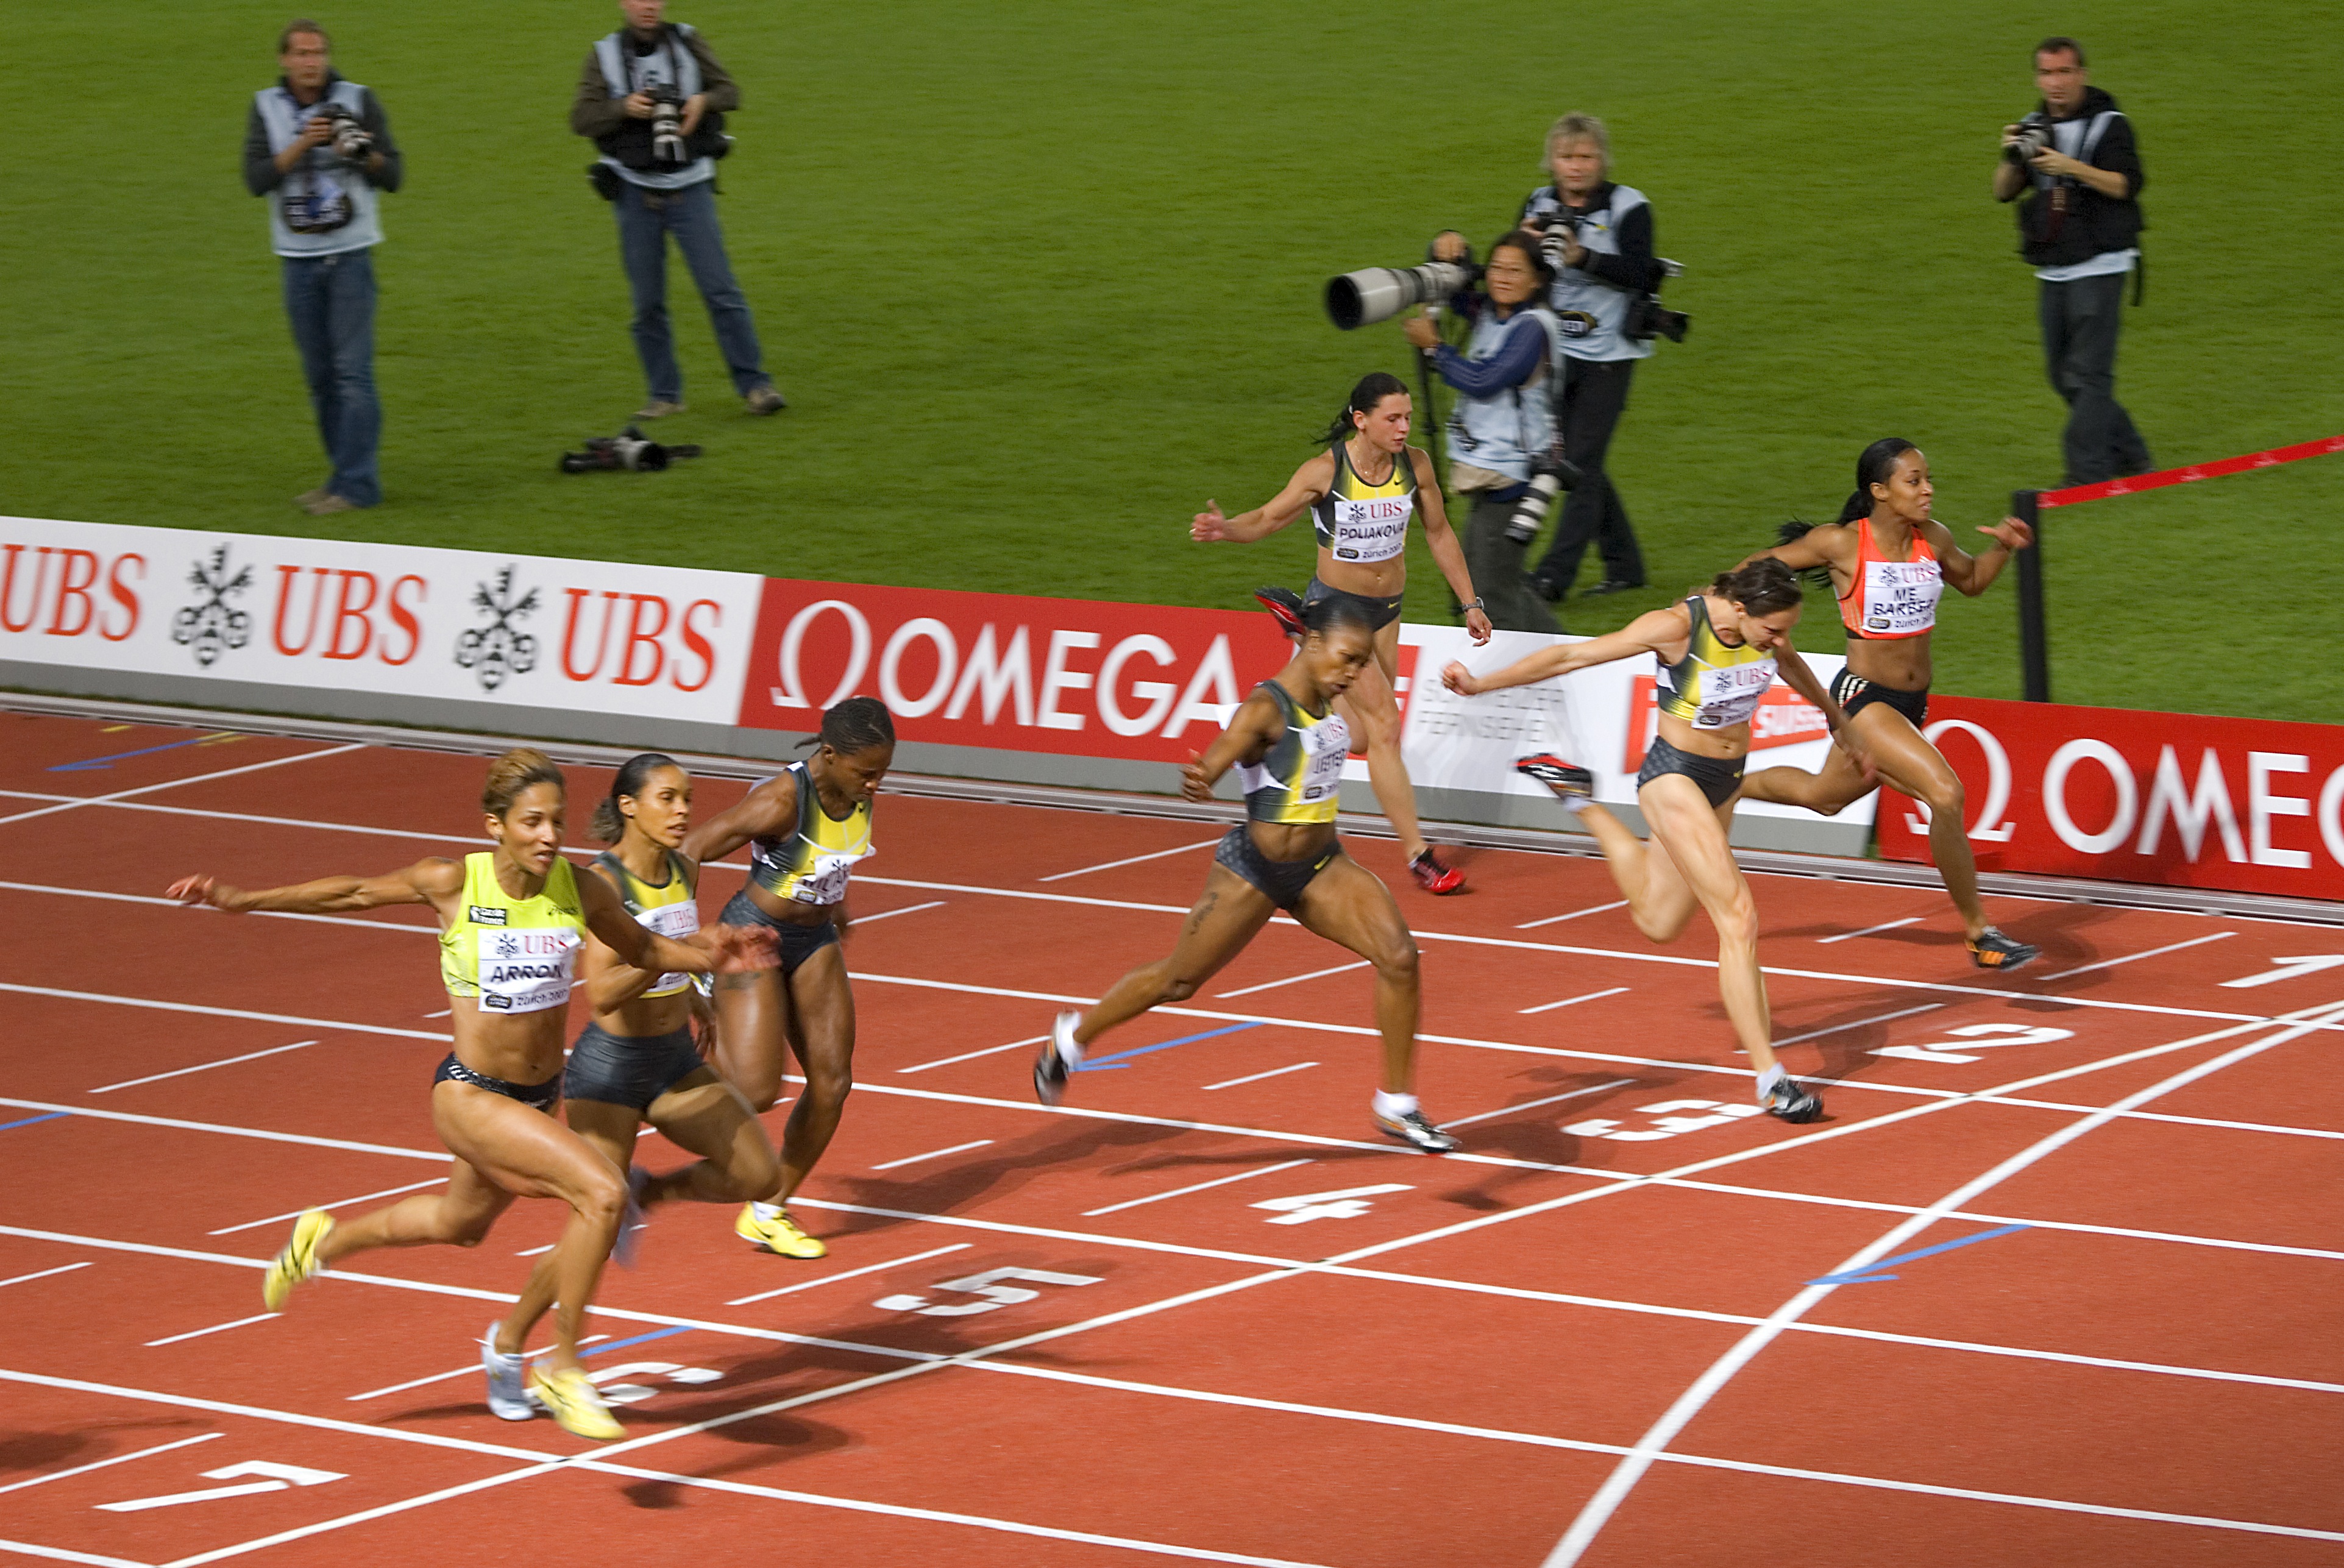 Women's 100m athletics race finish line